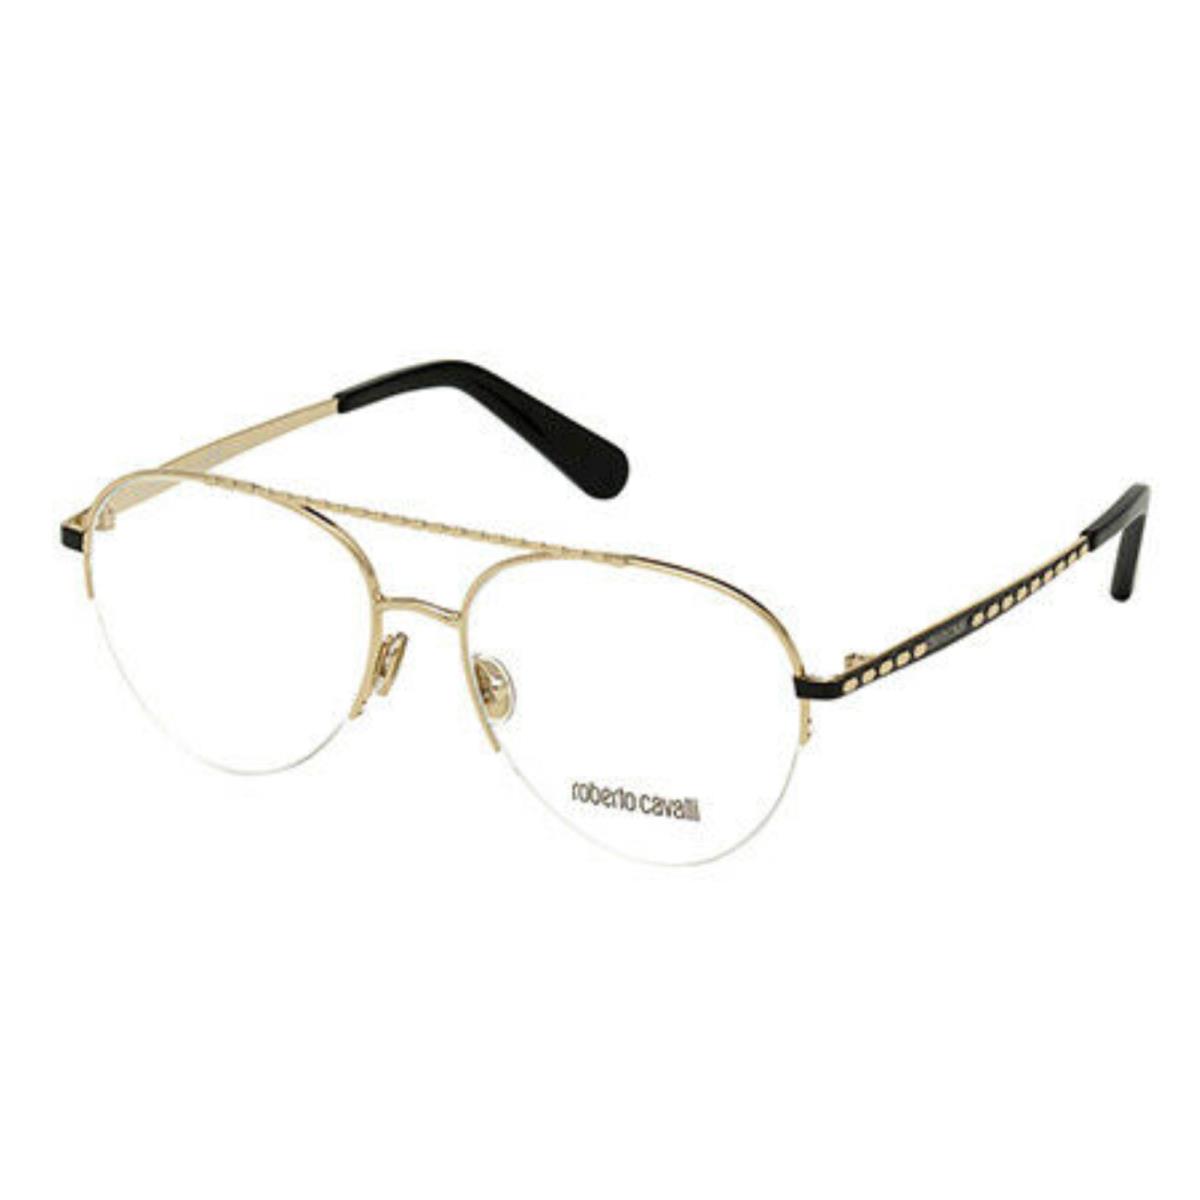 Roberto Cavalli Aviator Eyeglasses RC 5105 032 53-16 Gold Black Frames ...